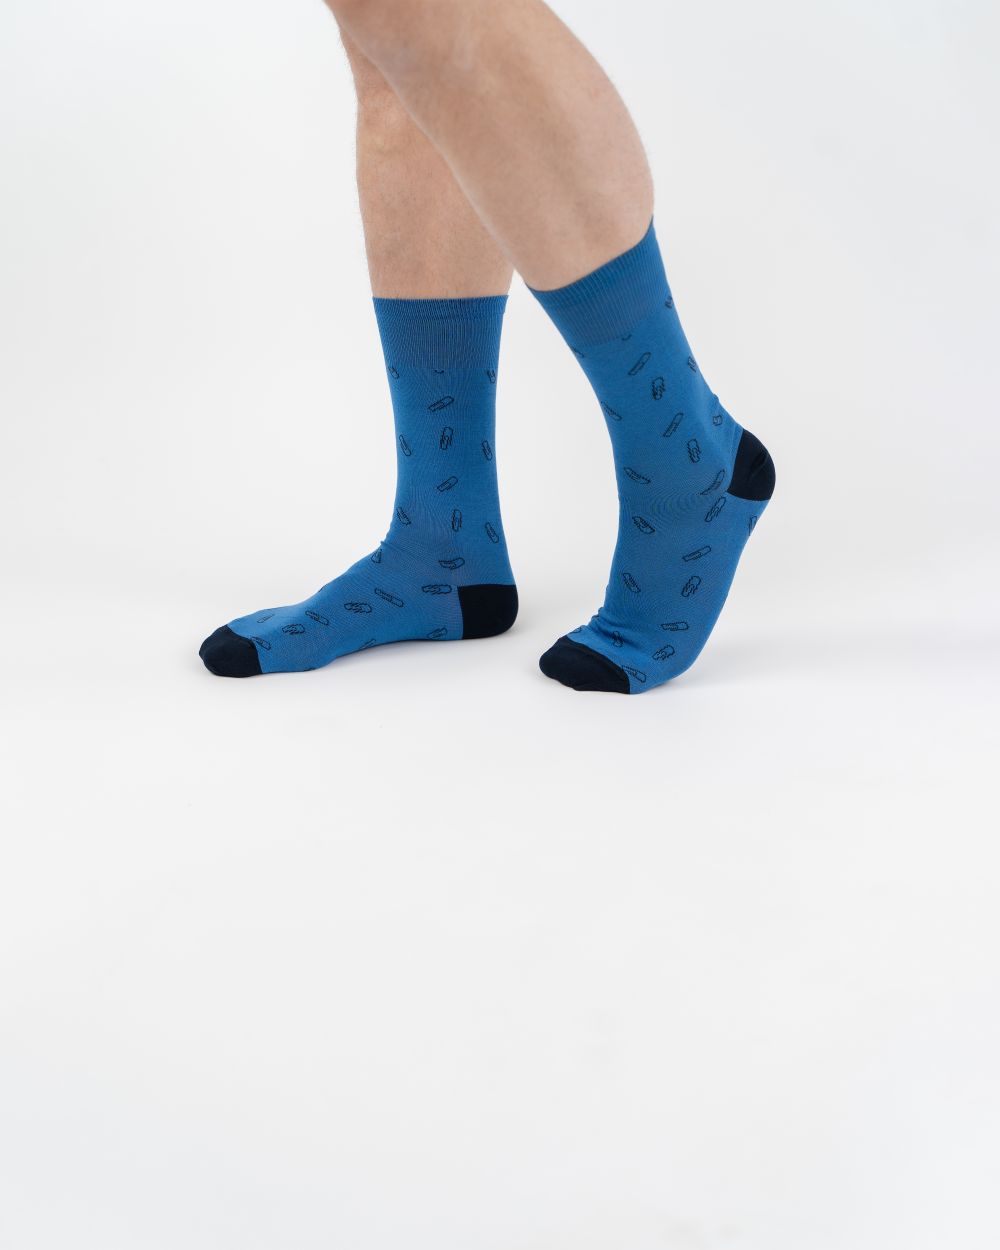 Navigare Intimo muške čarape plave boje